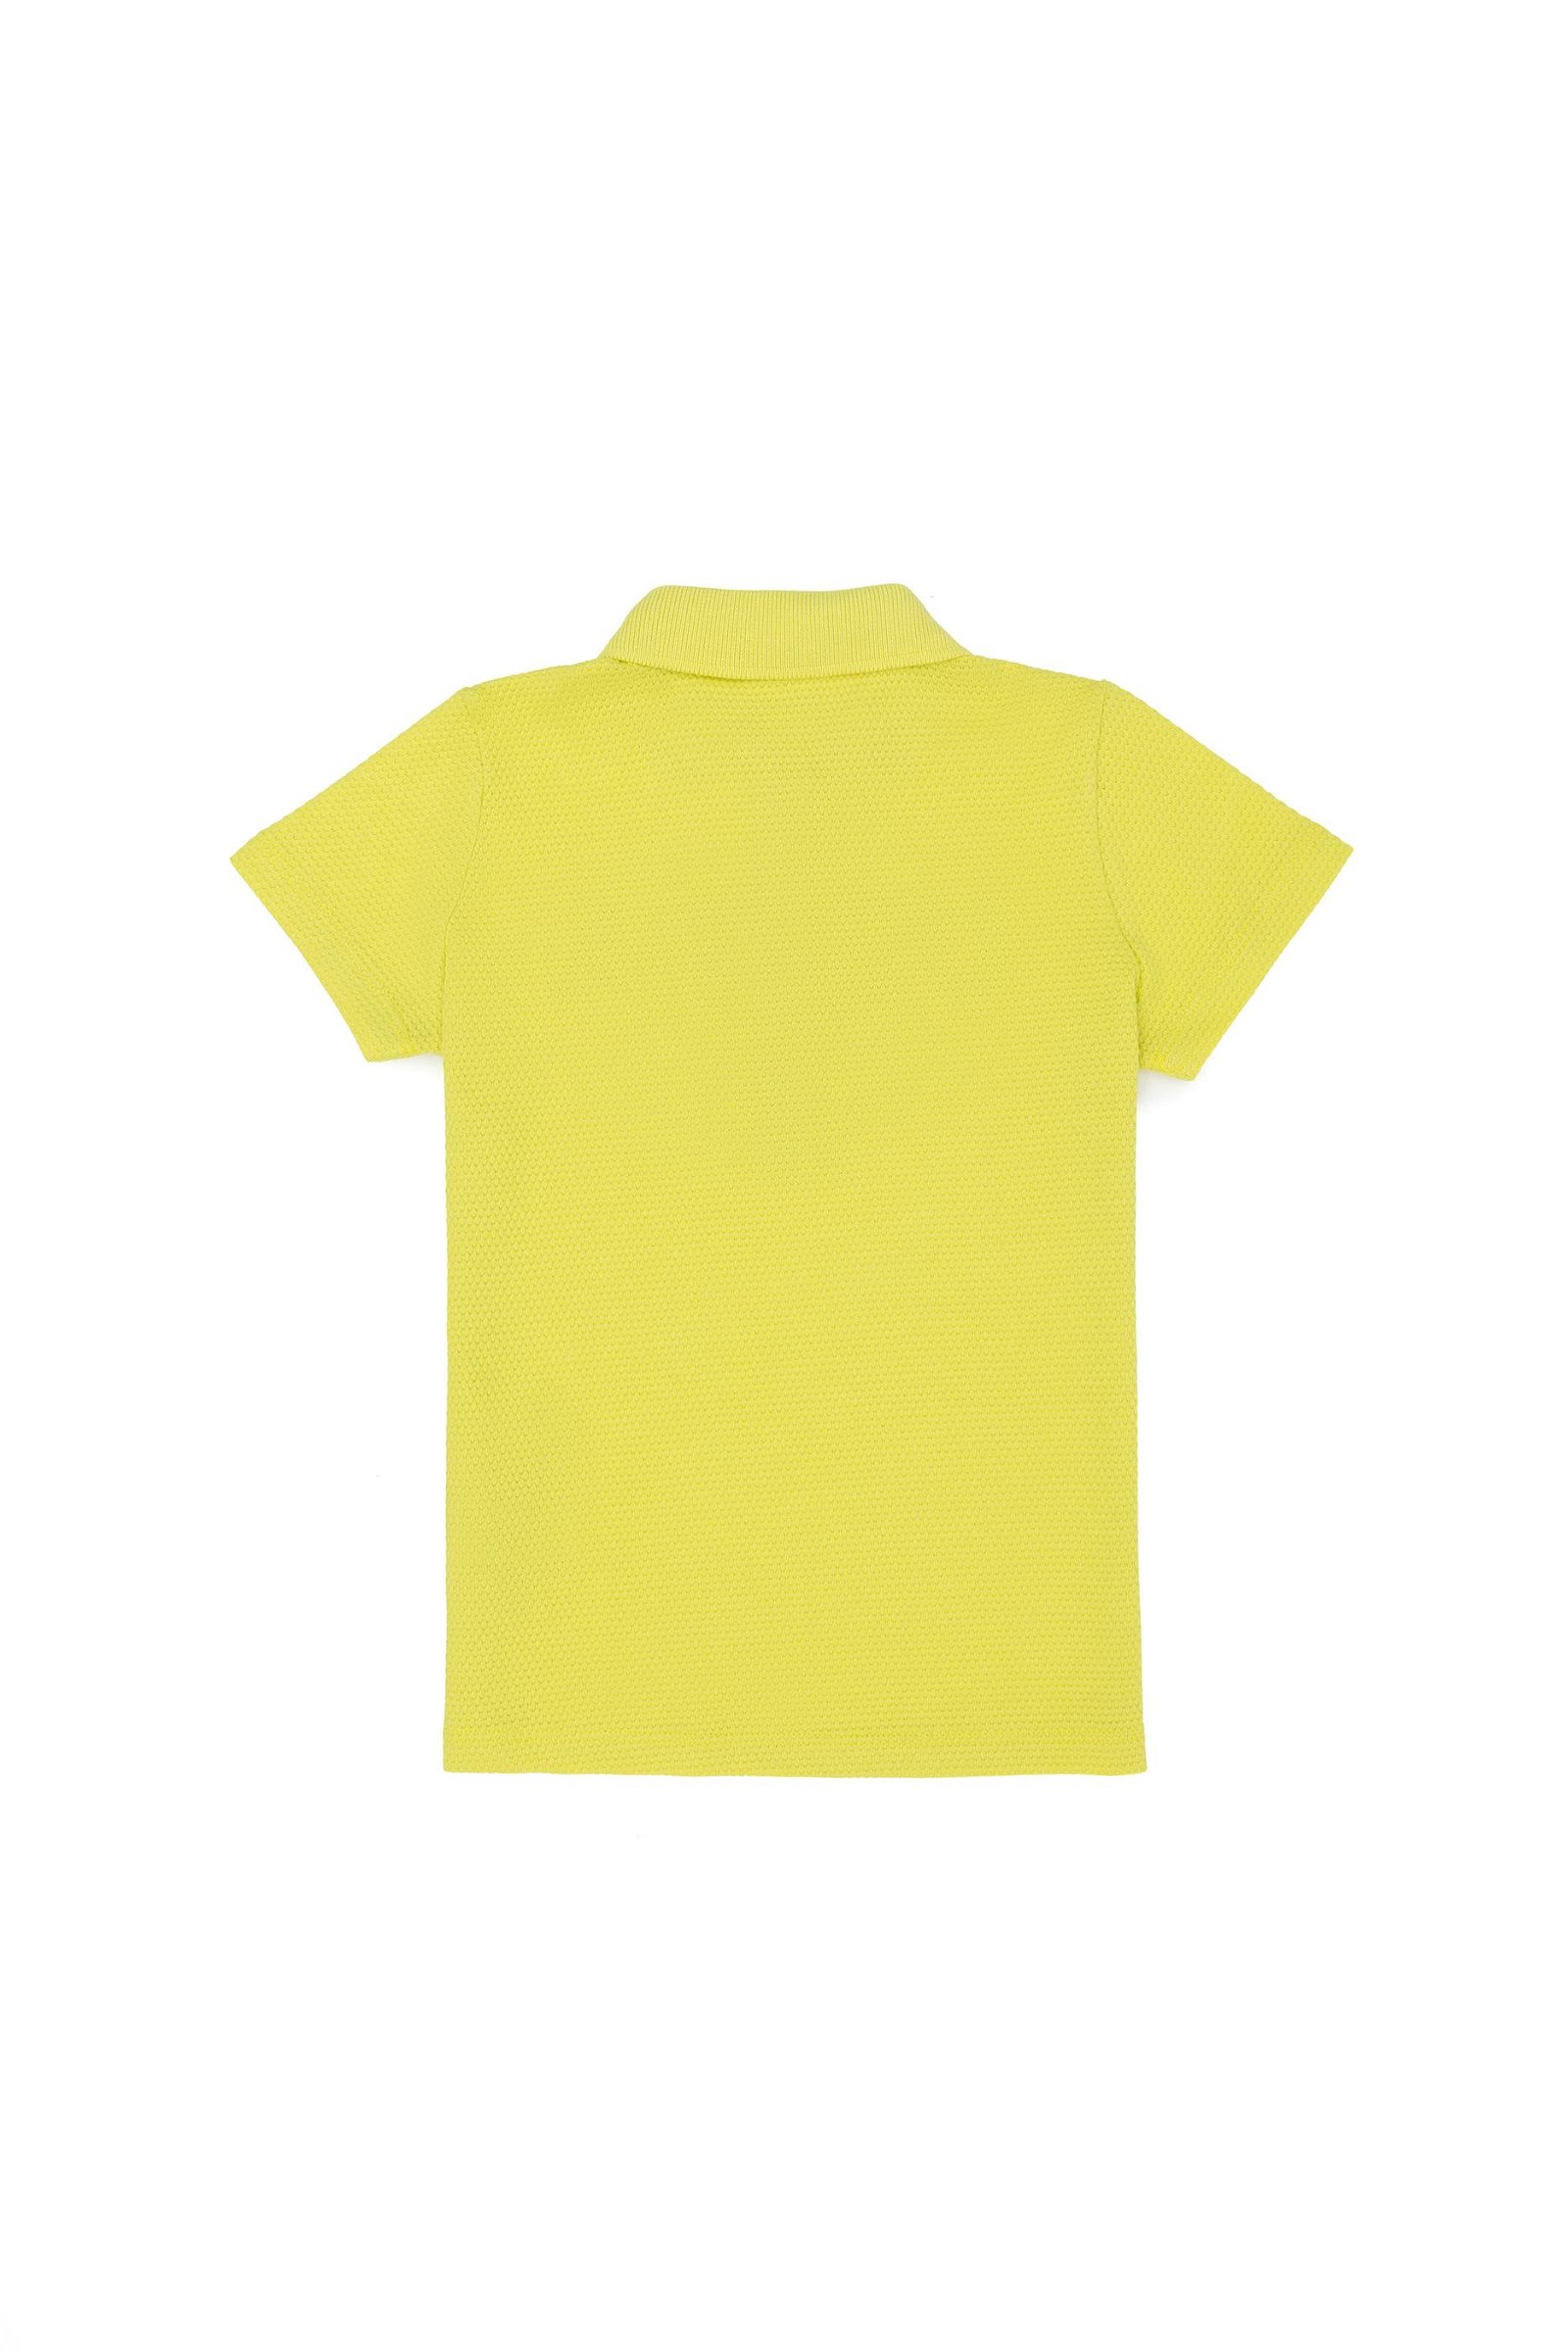 Kız Çocuk Neon Sarı Polo Yaka Tişört